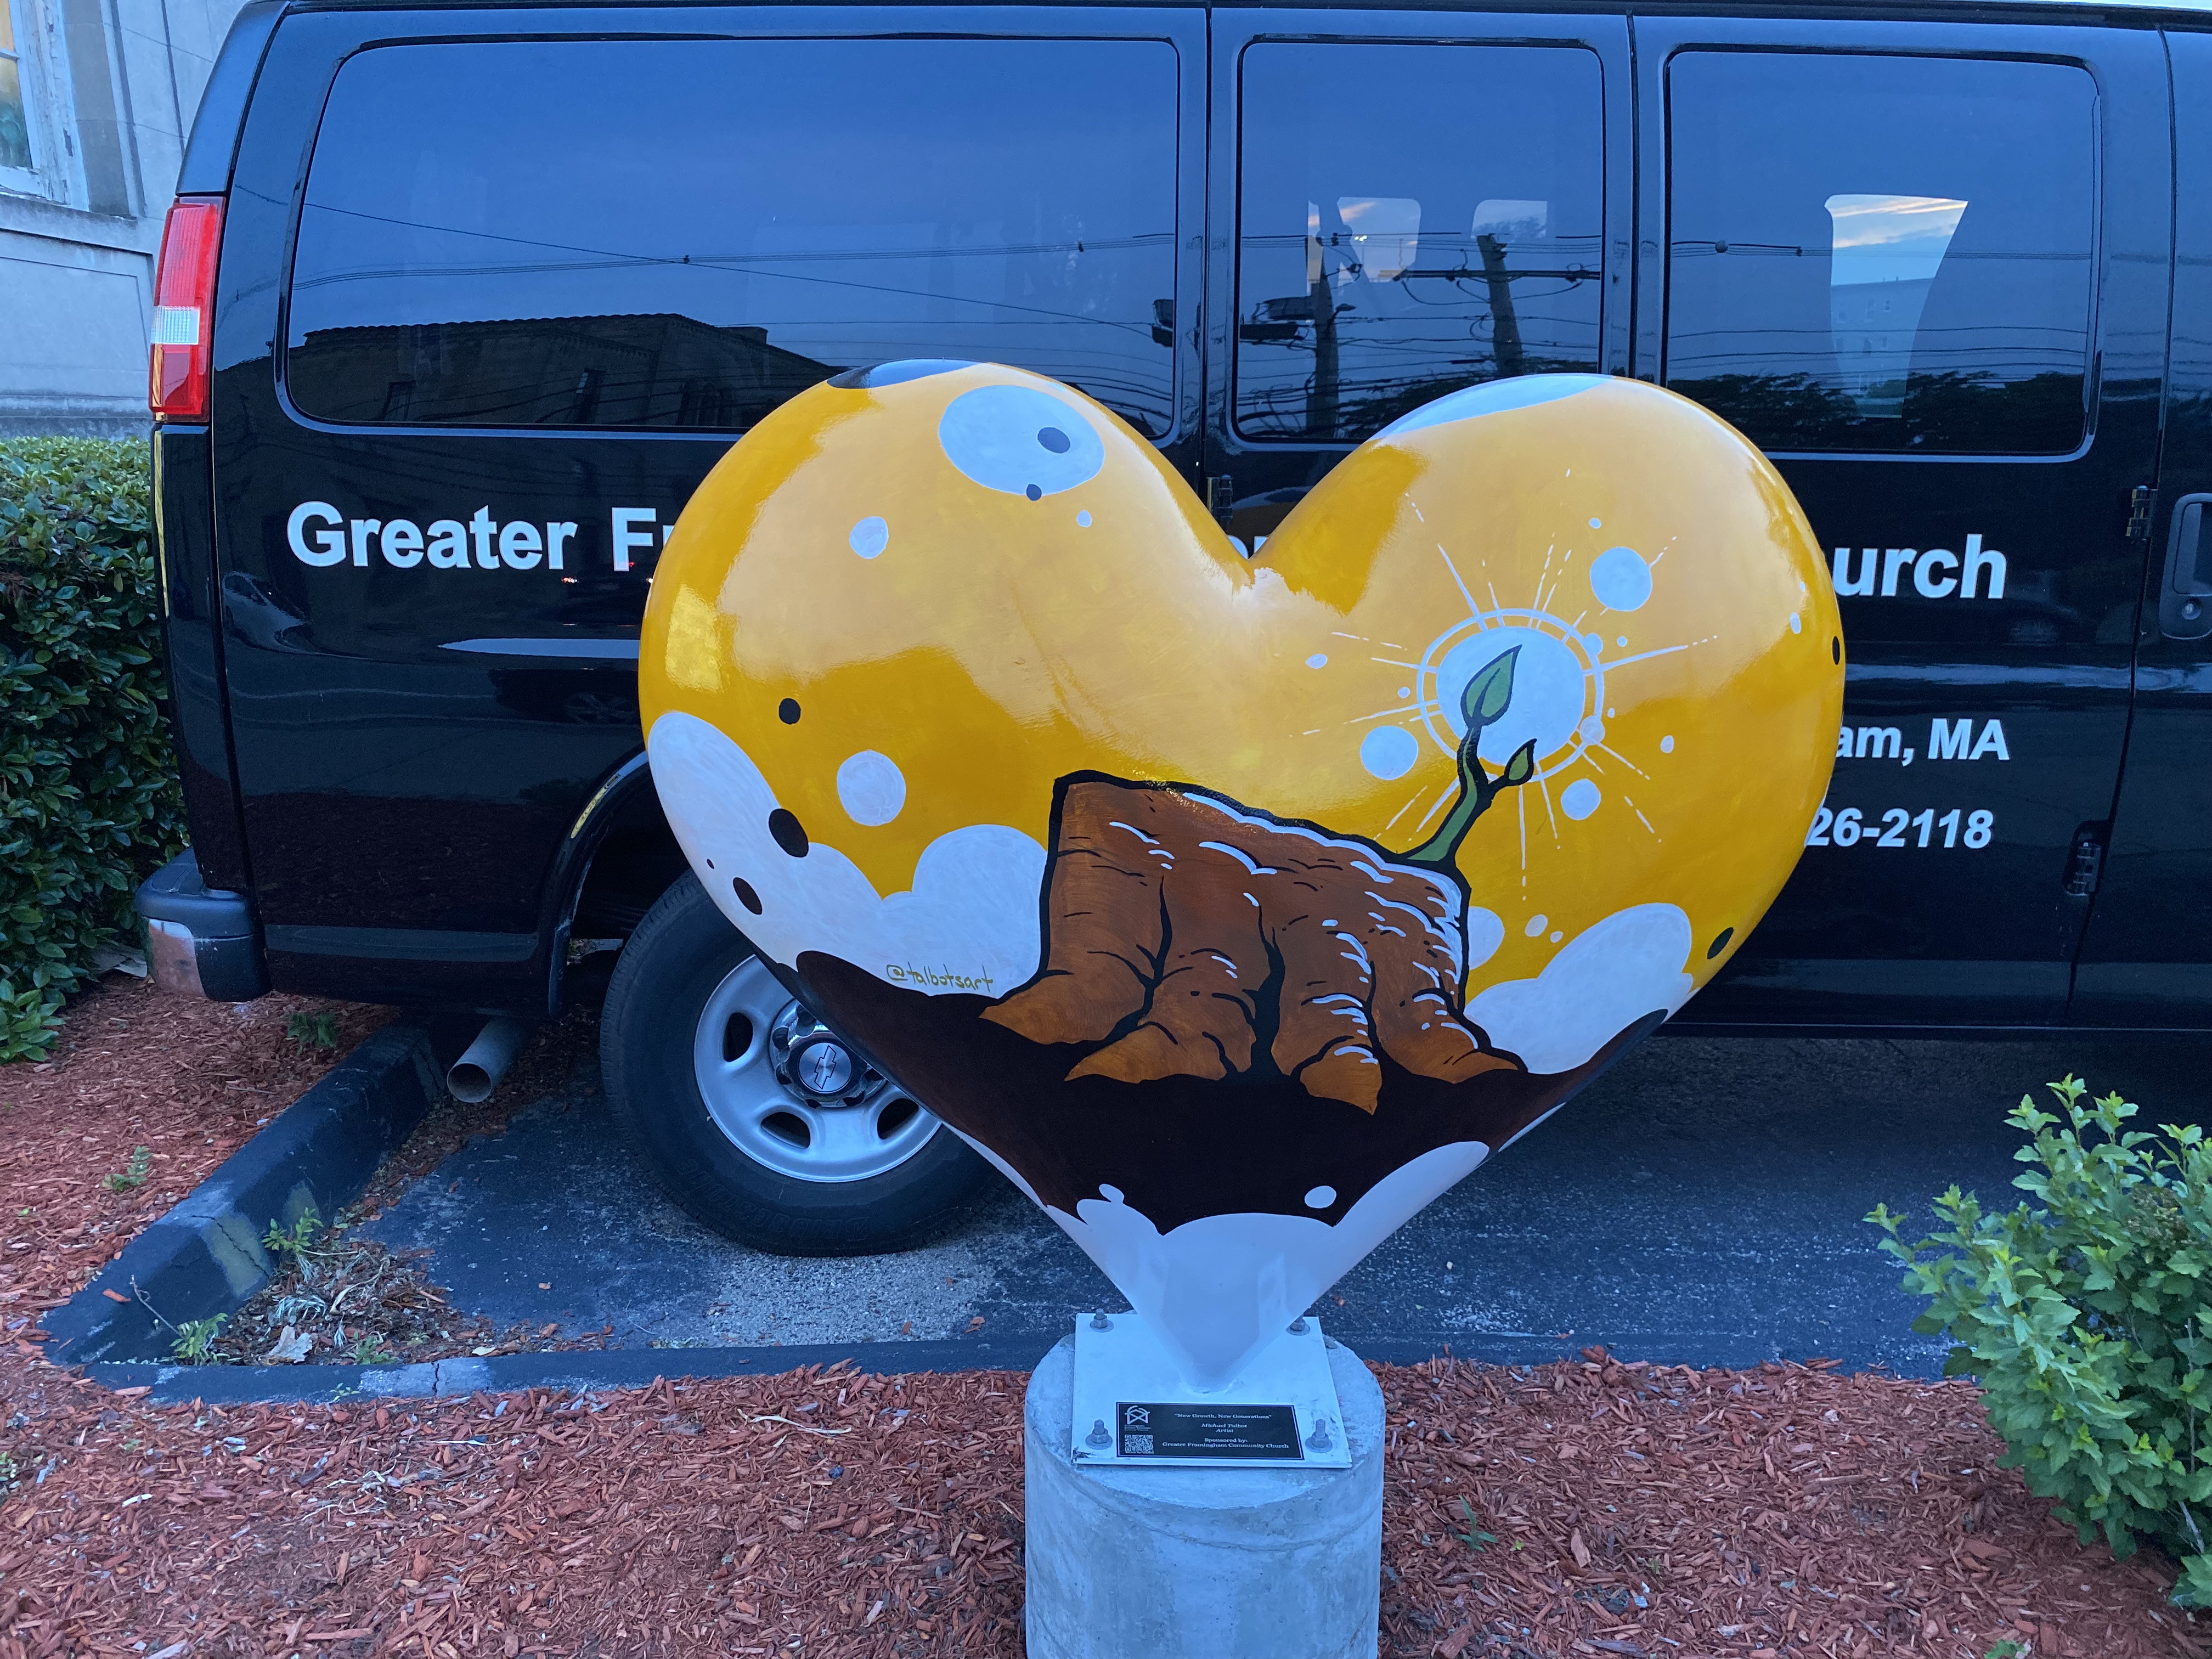 Hearts Around Framingham sculpture in front of the church van